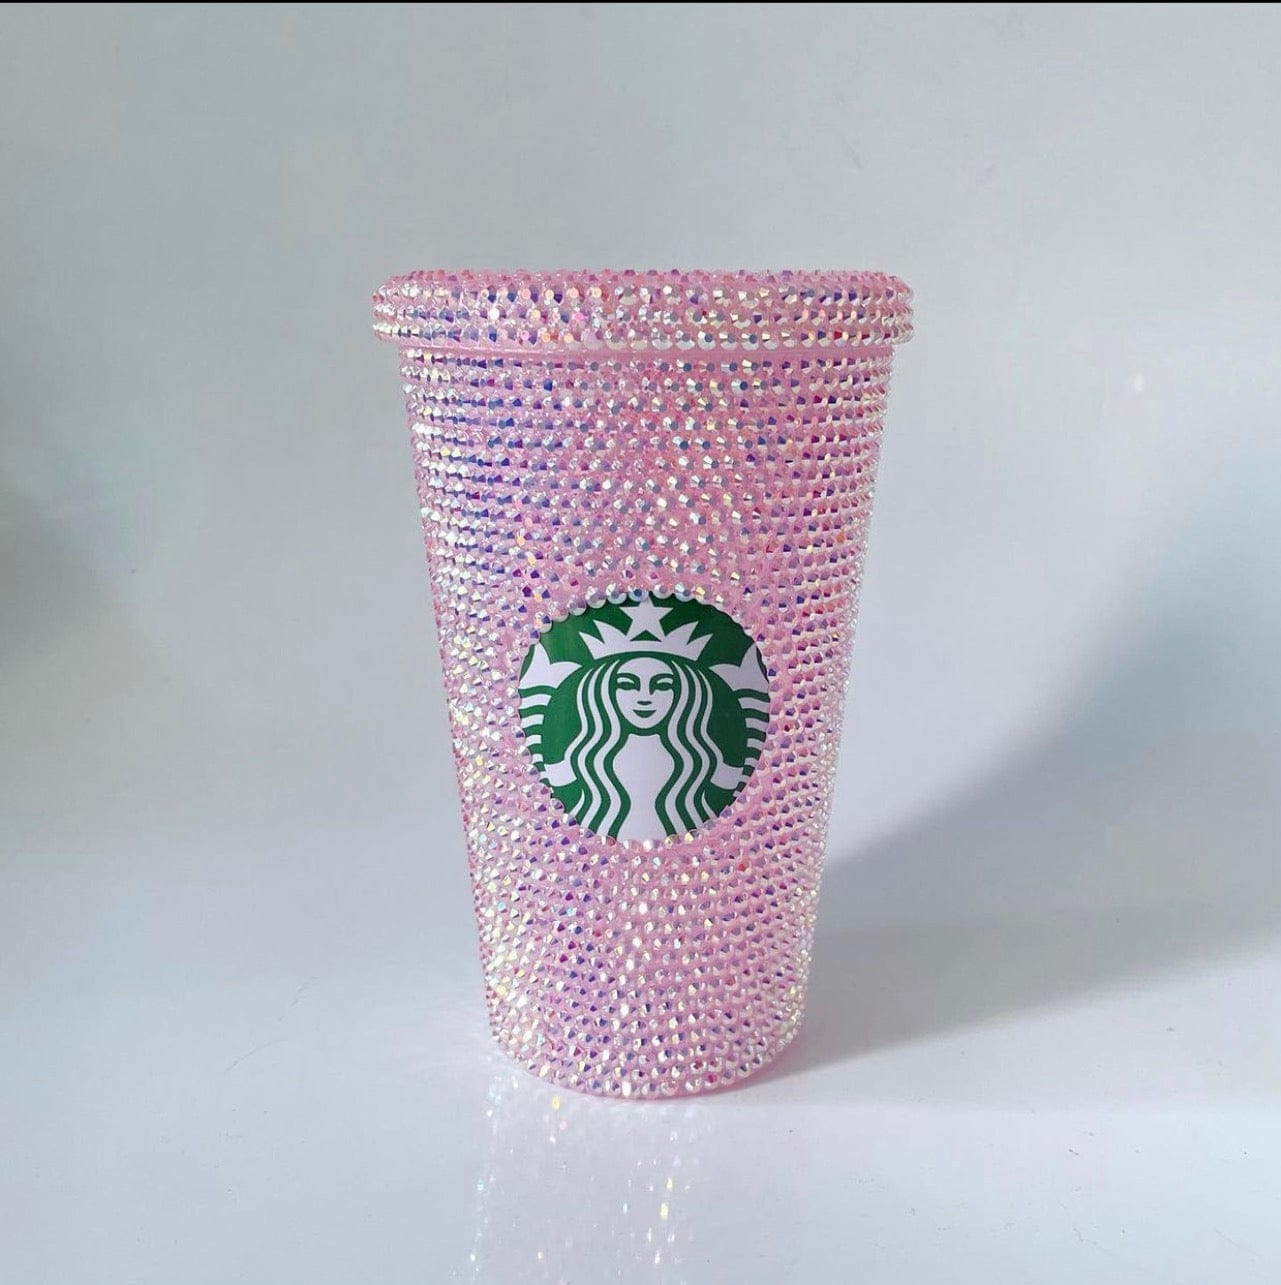 ‘Milky Way’ Jelly Bling Starbucks Tumbler Cup by Bling Addict | BlingxAddict